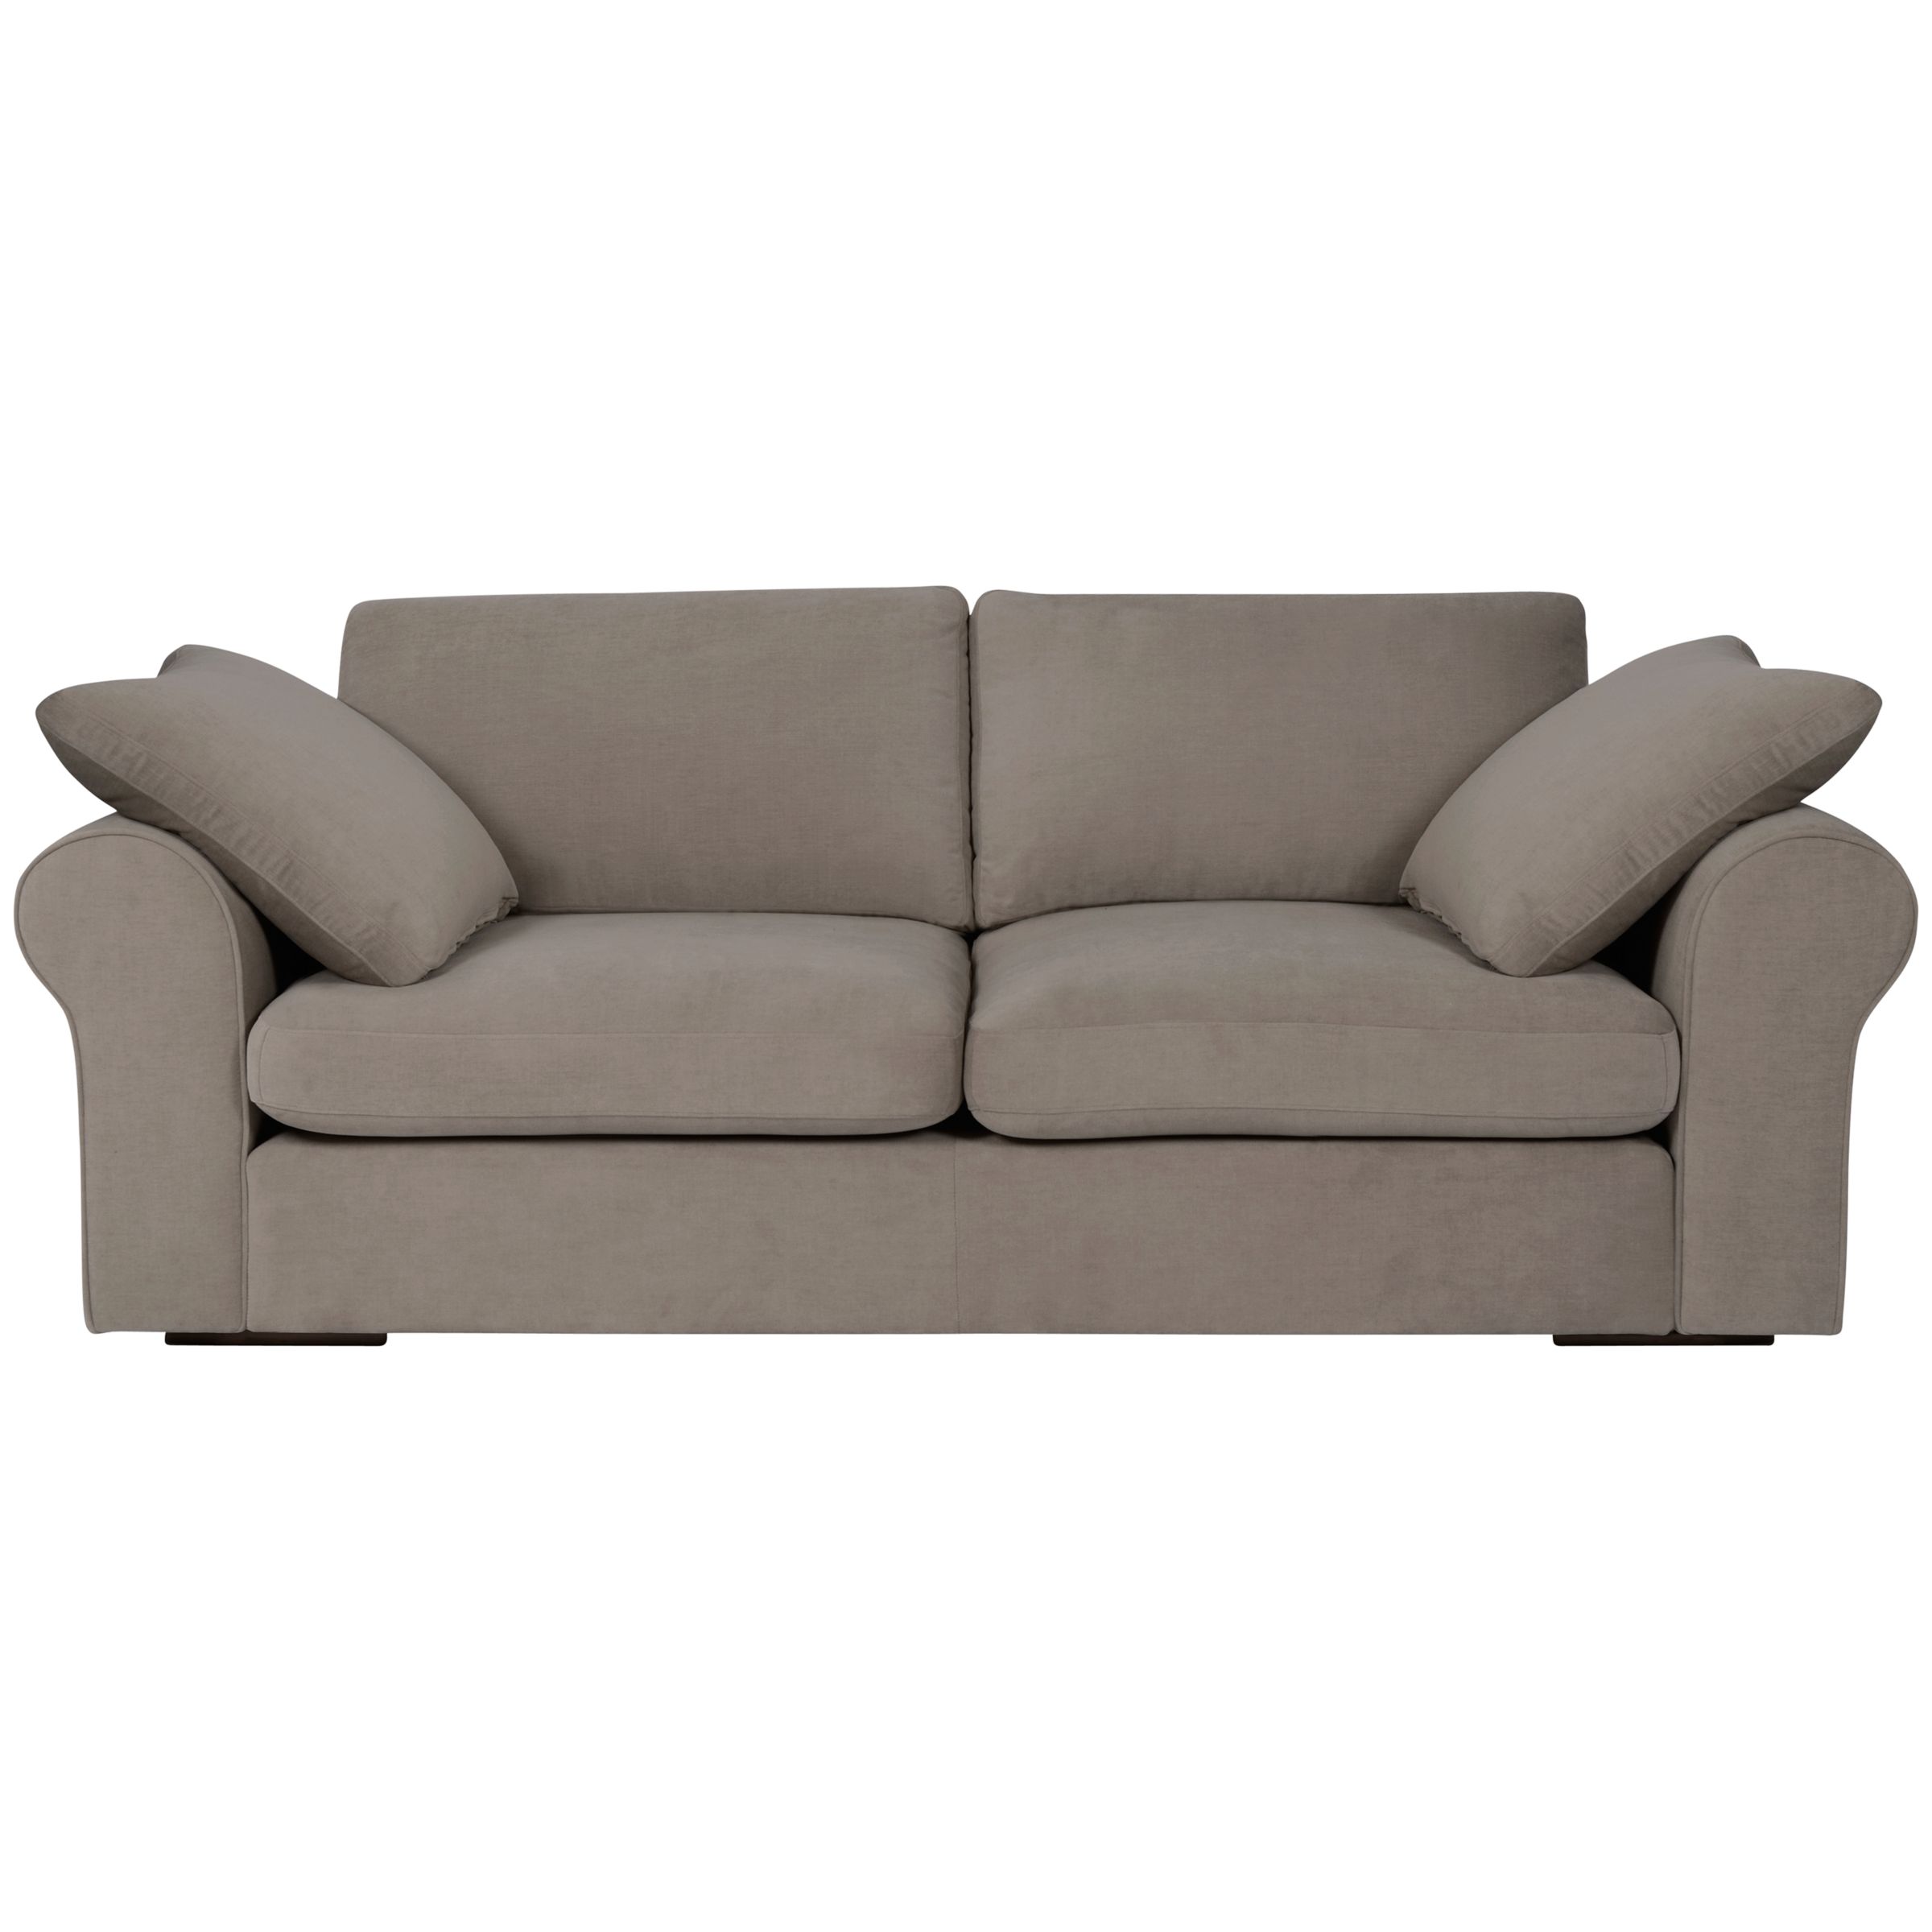 John Lewis Jones Options 2 Scroll Arm Large Sofa, Mercury, width 208cm